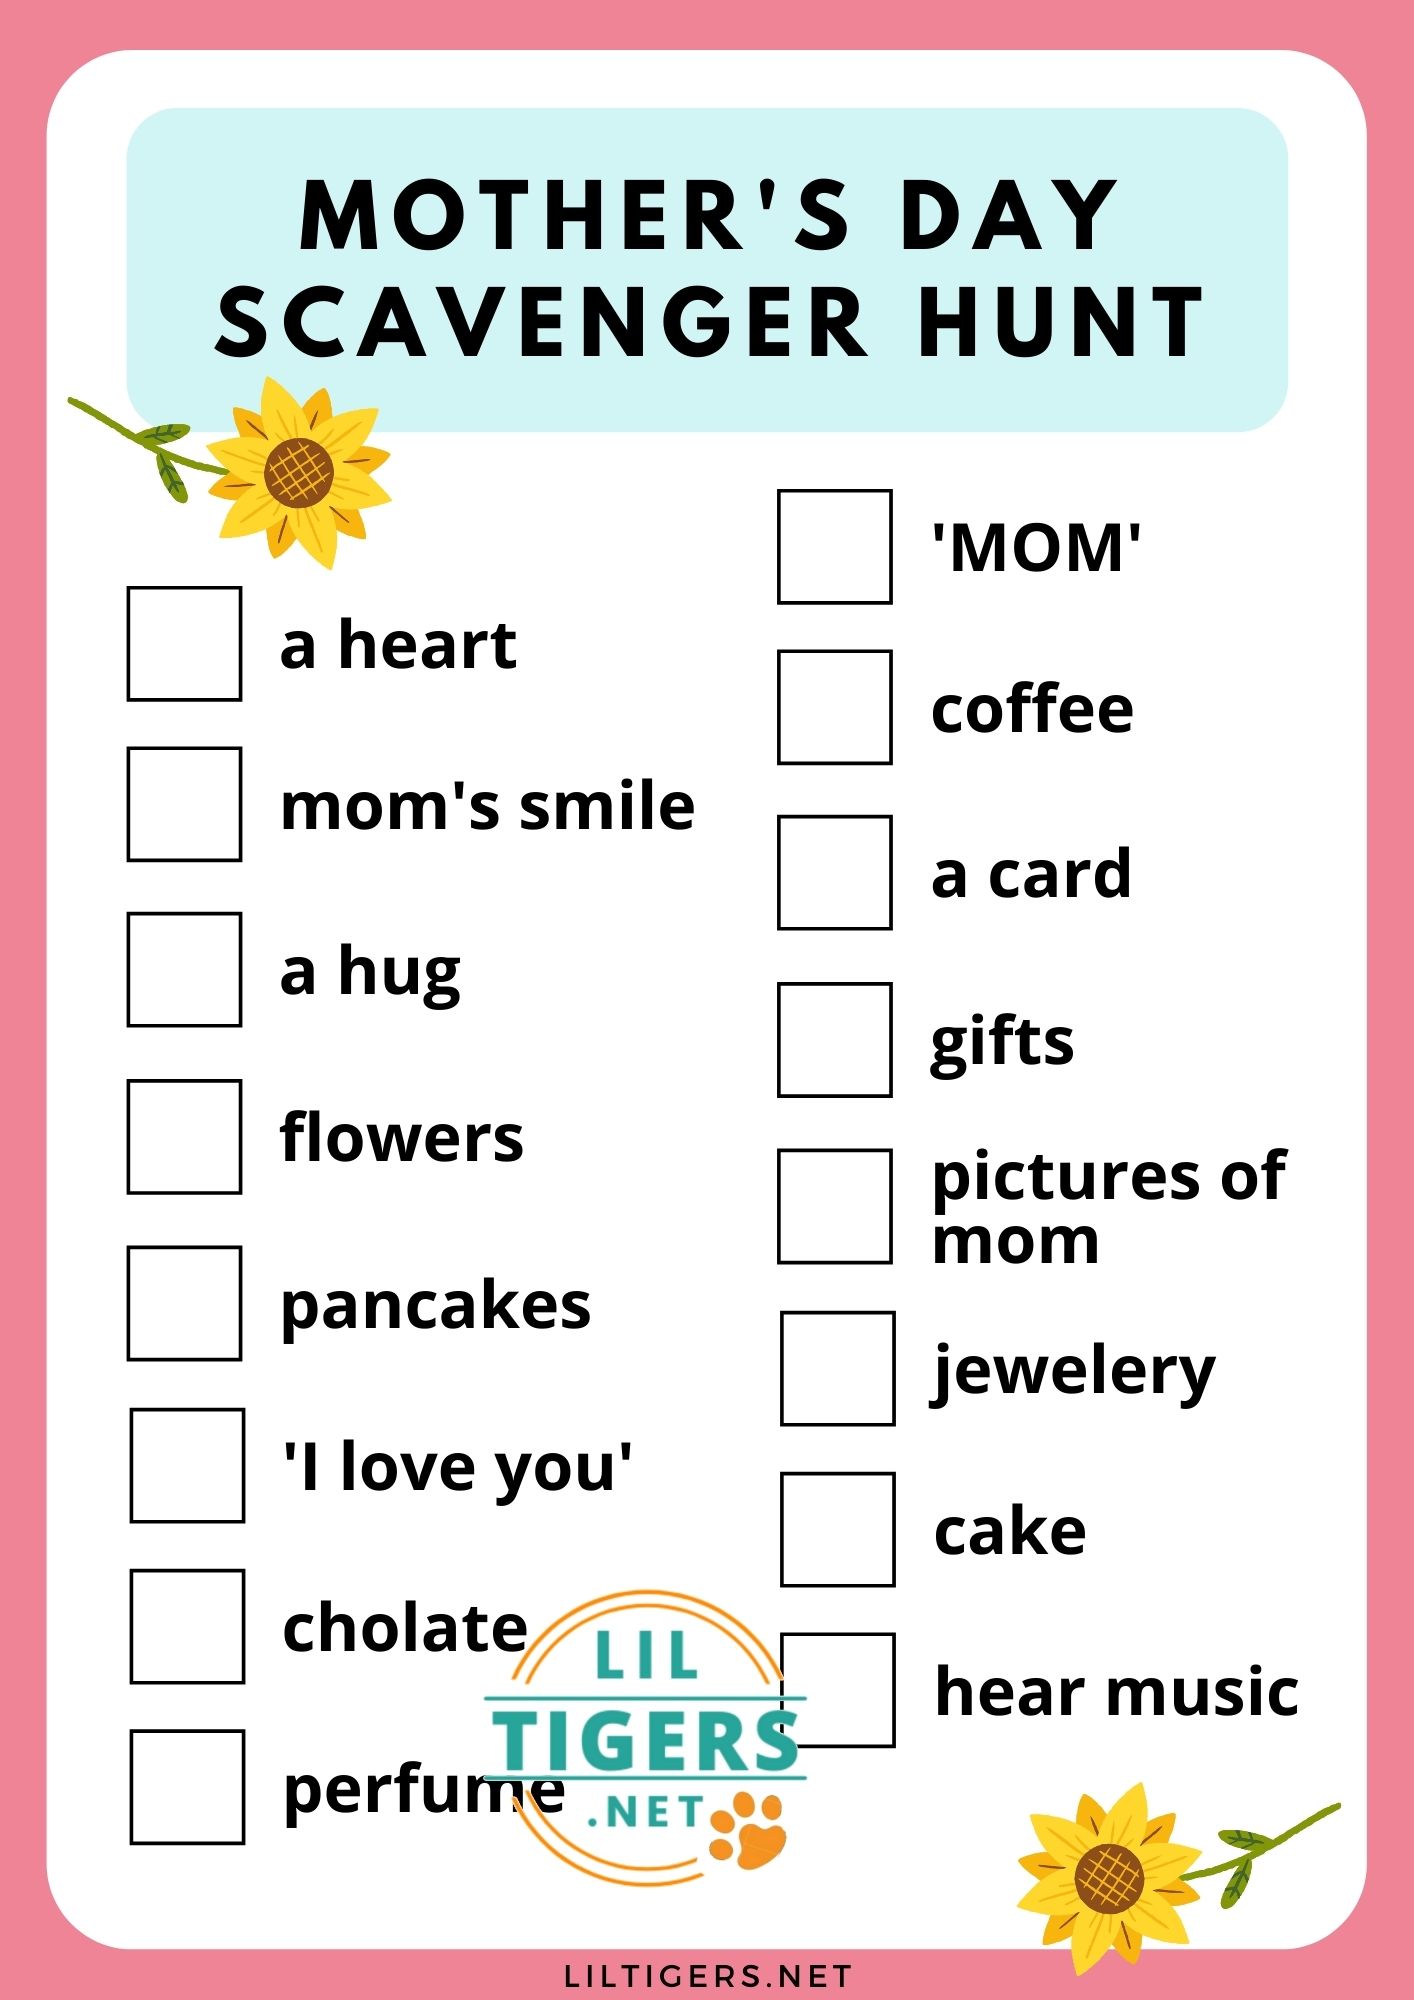 Scavenger hunt for mother's day